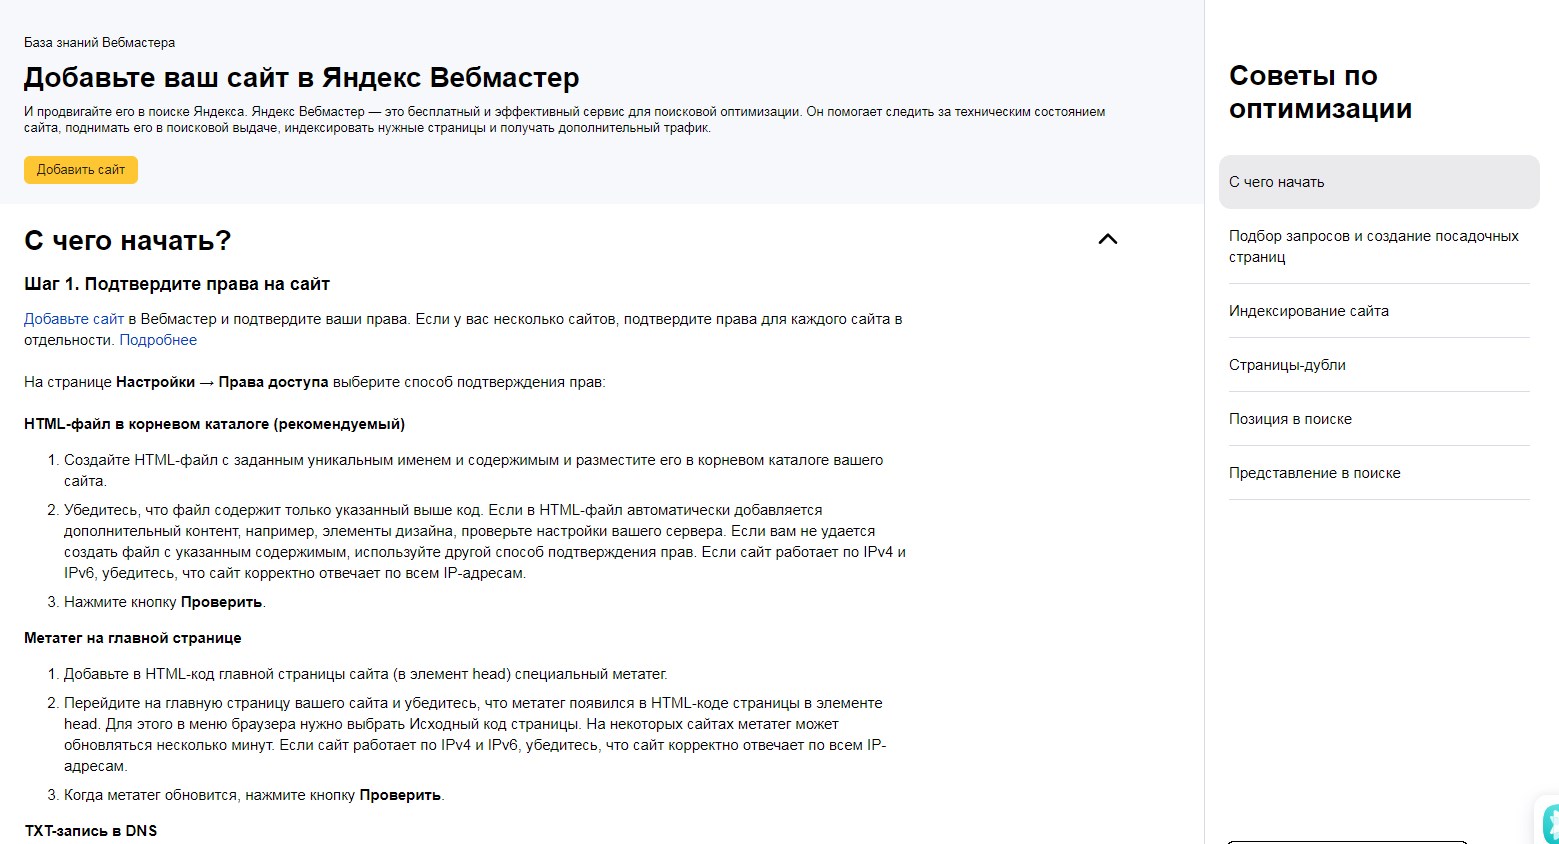 Советы по оптимизации от Яндекс.Вебмастер